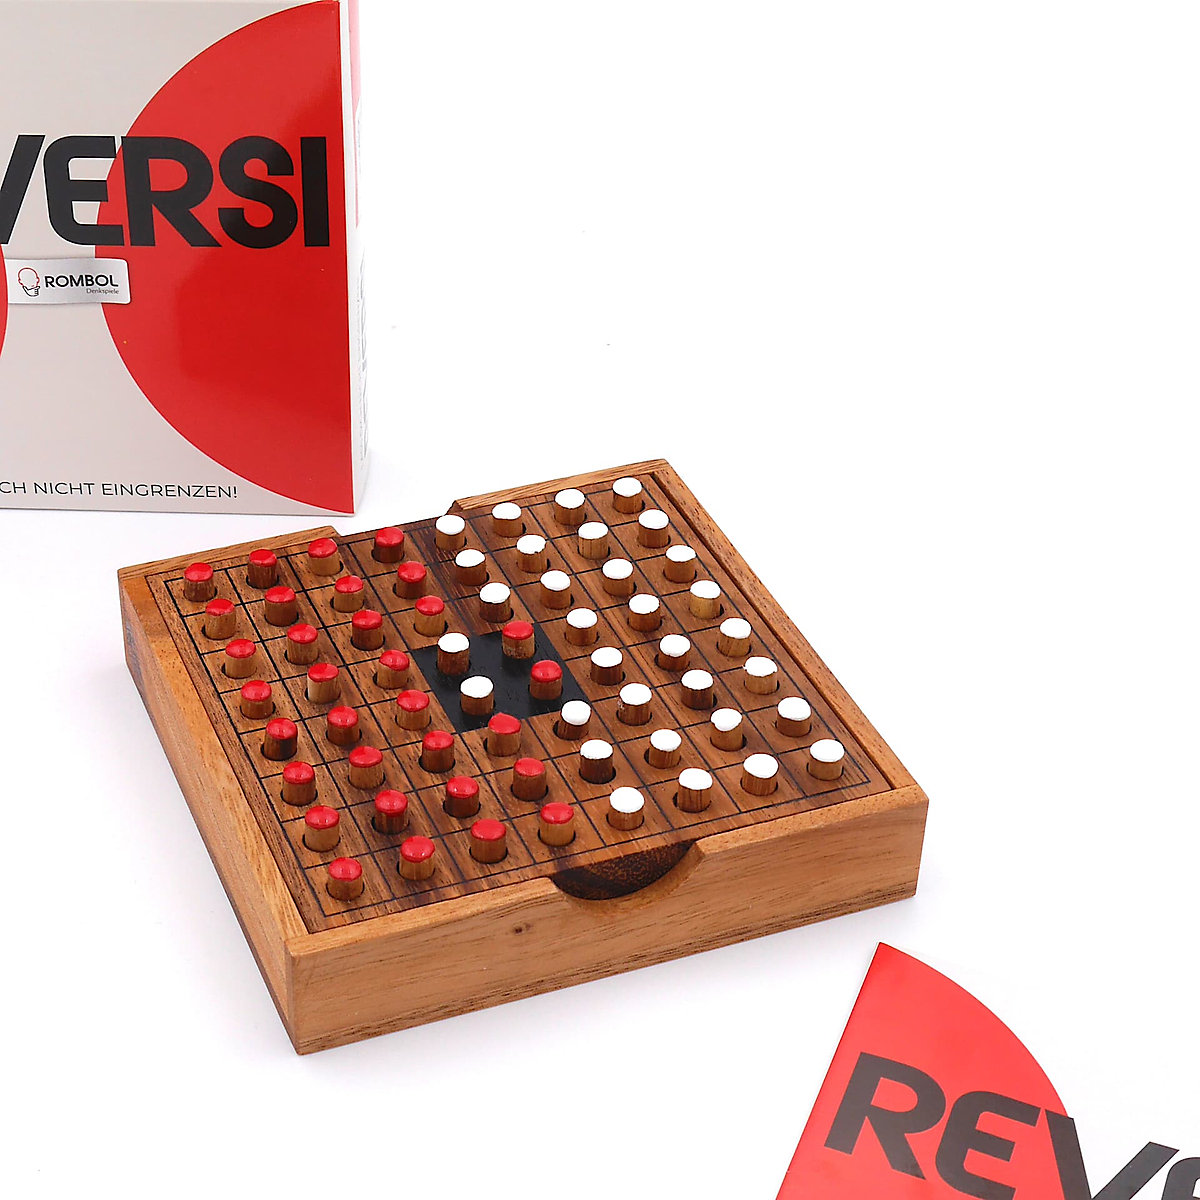 ROMBOL Reversi – Interessantes Strategiespiel für 2 Personen aus edlem Holz